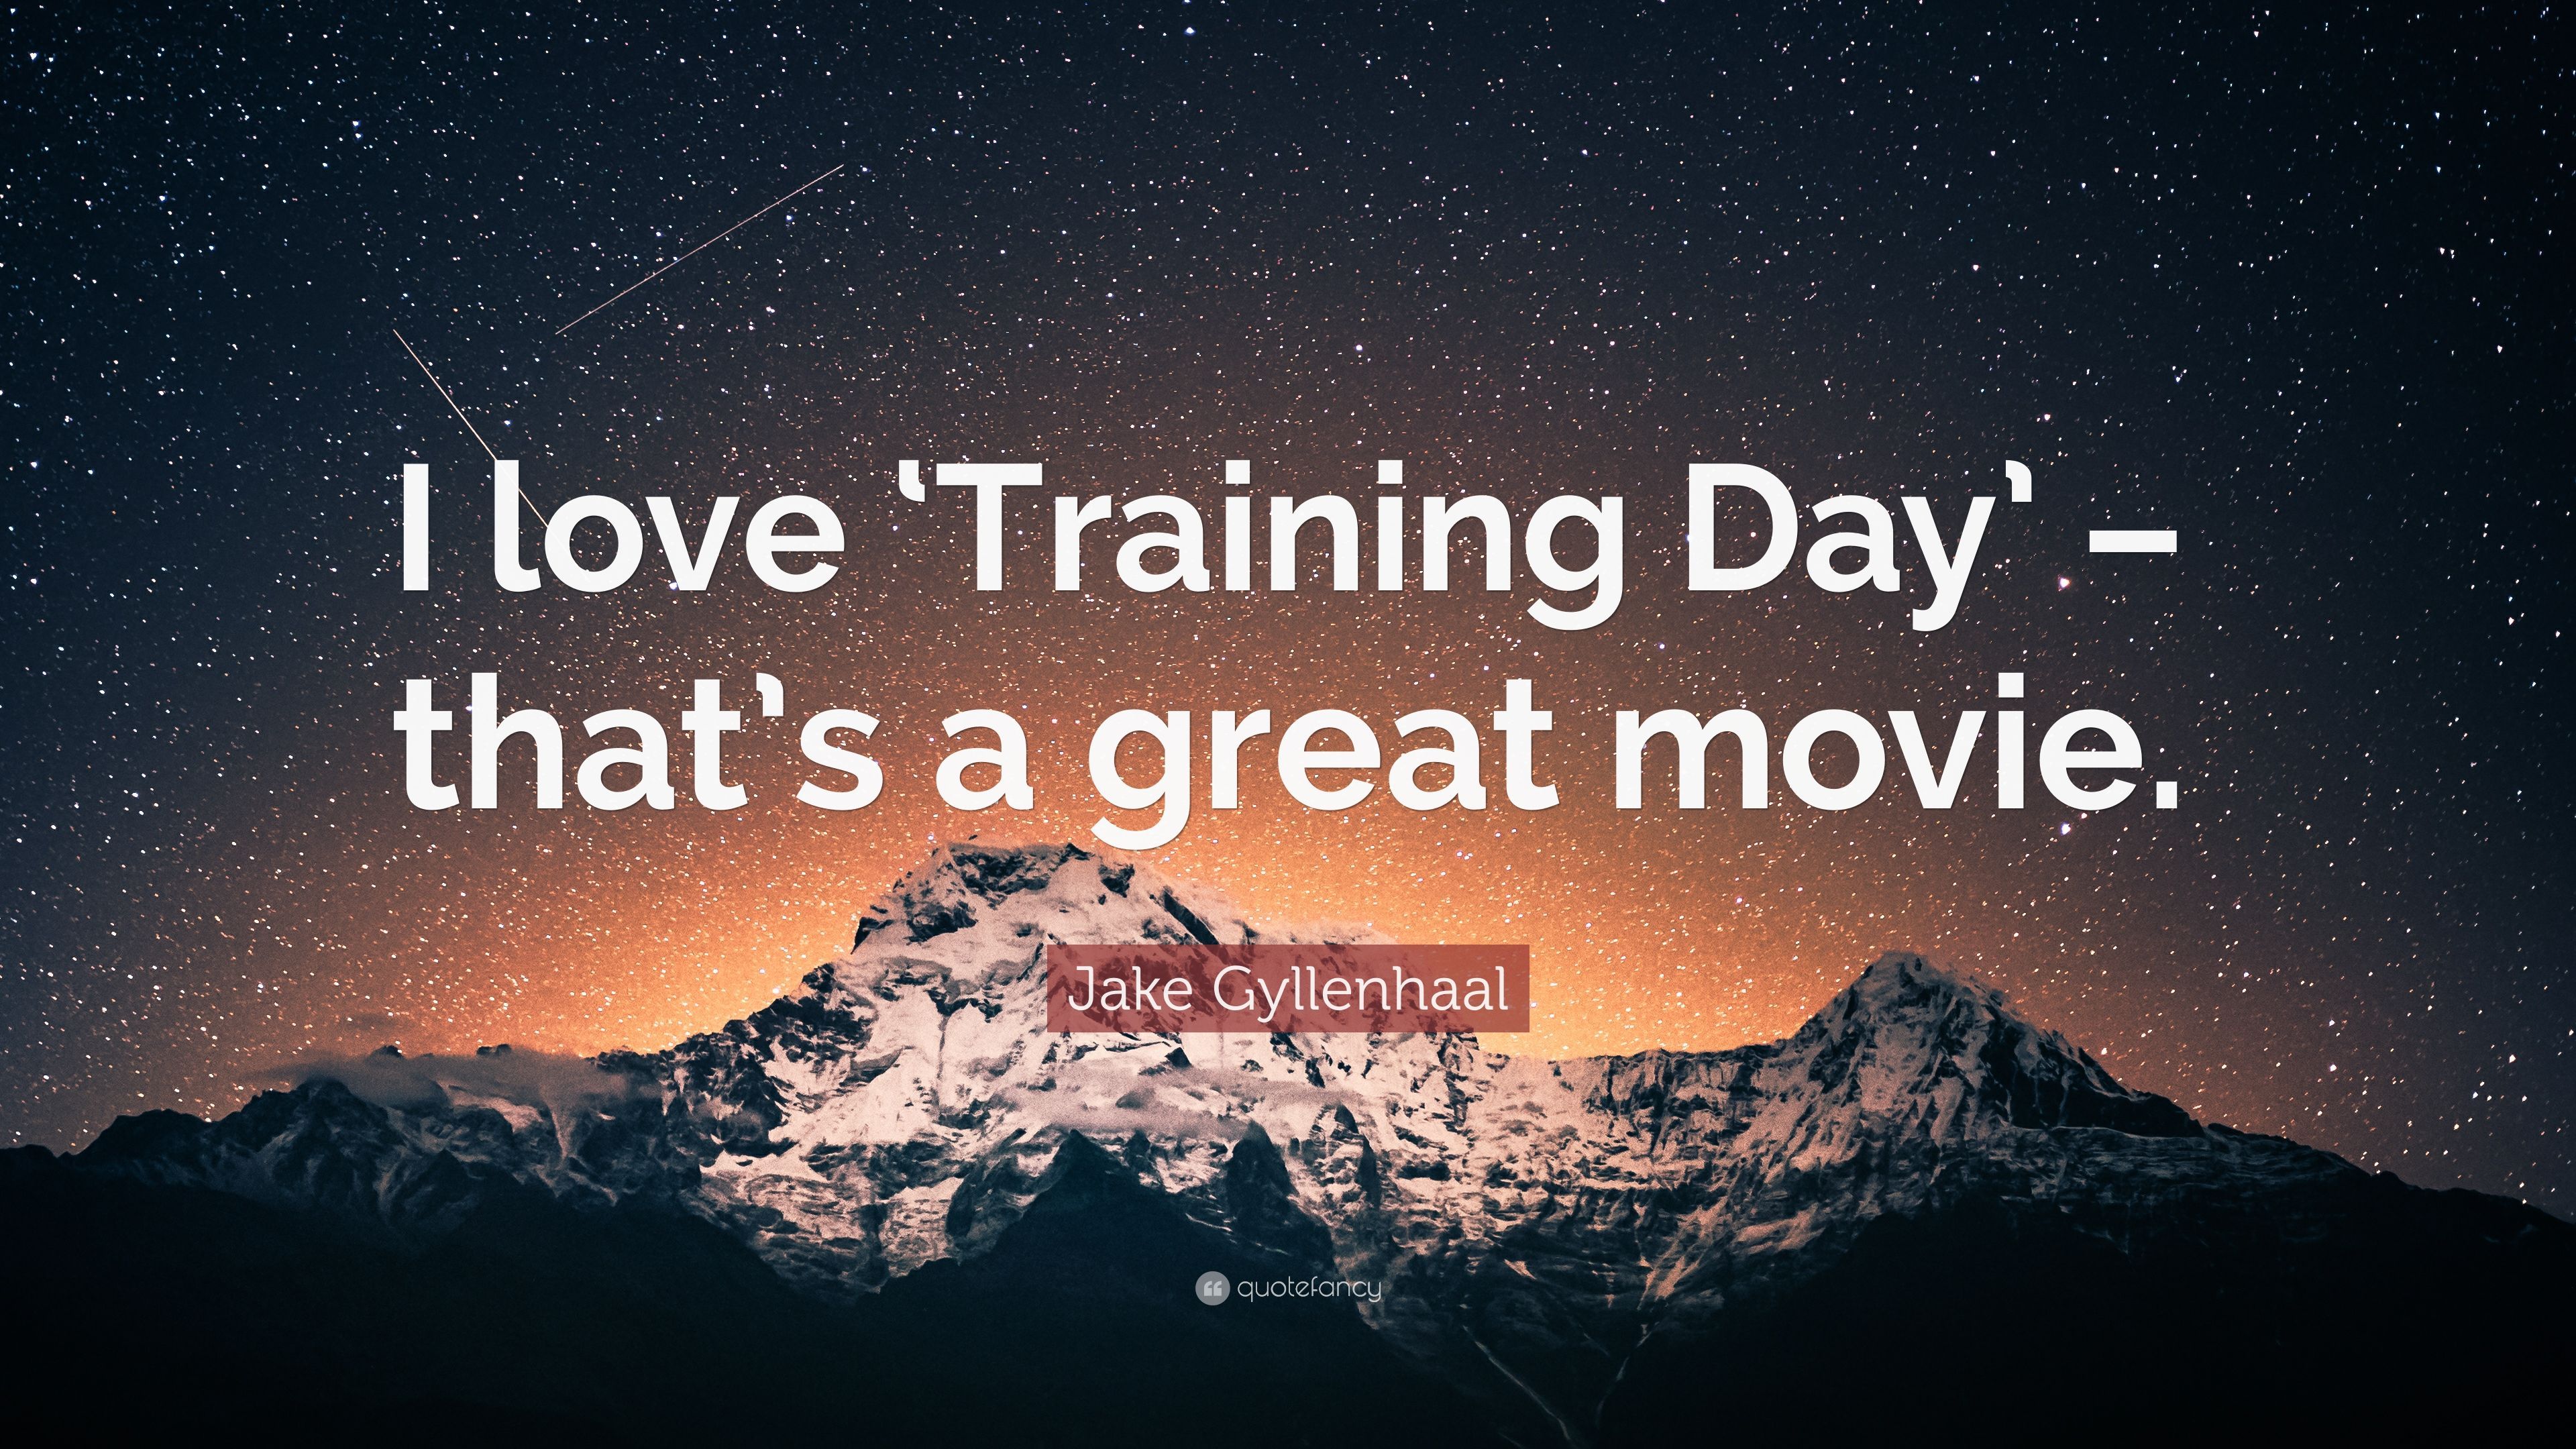 Jake Gyllenhaal Quote: “I love 'Training Day'